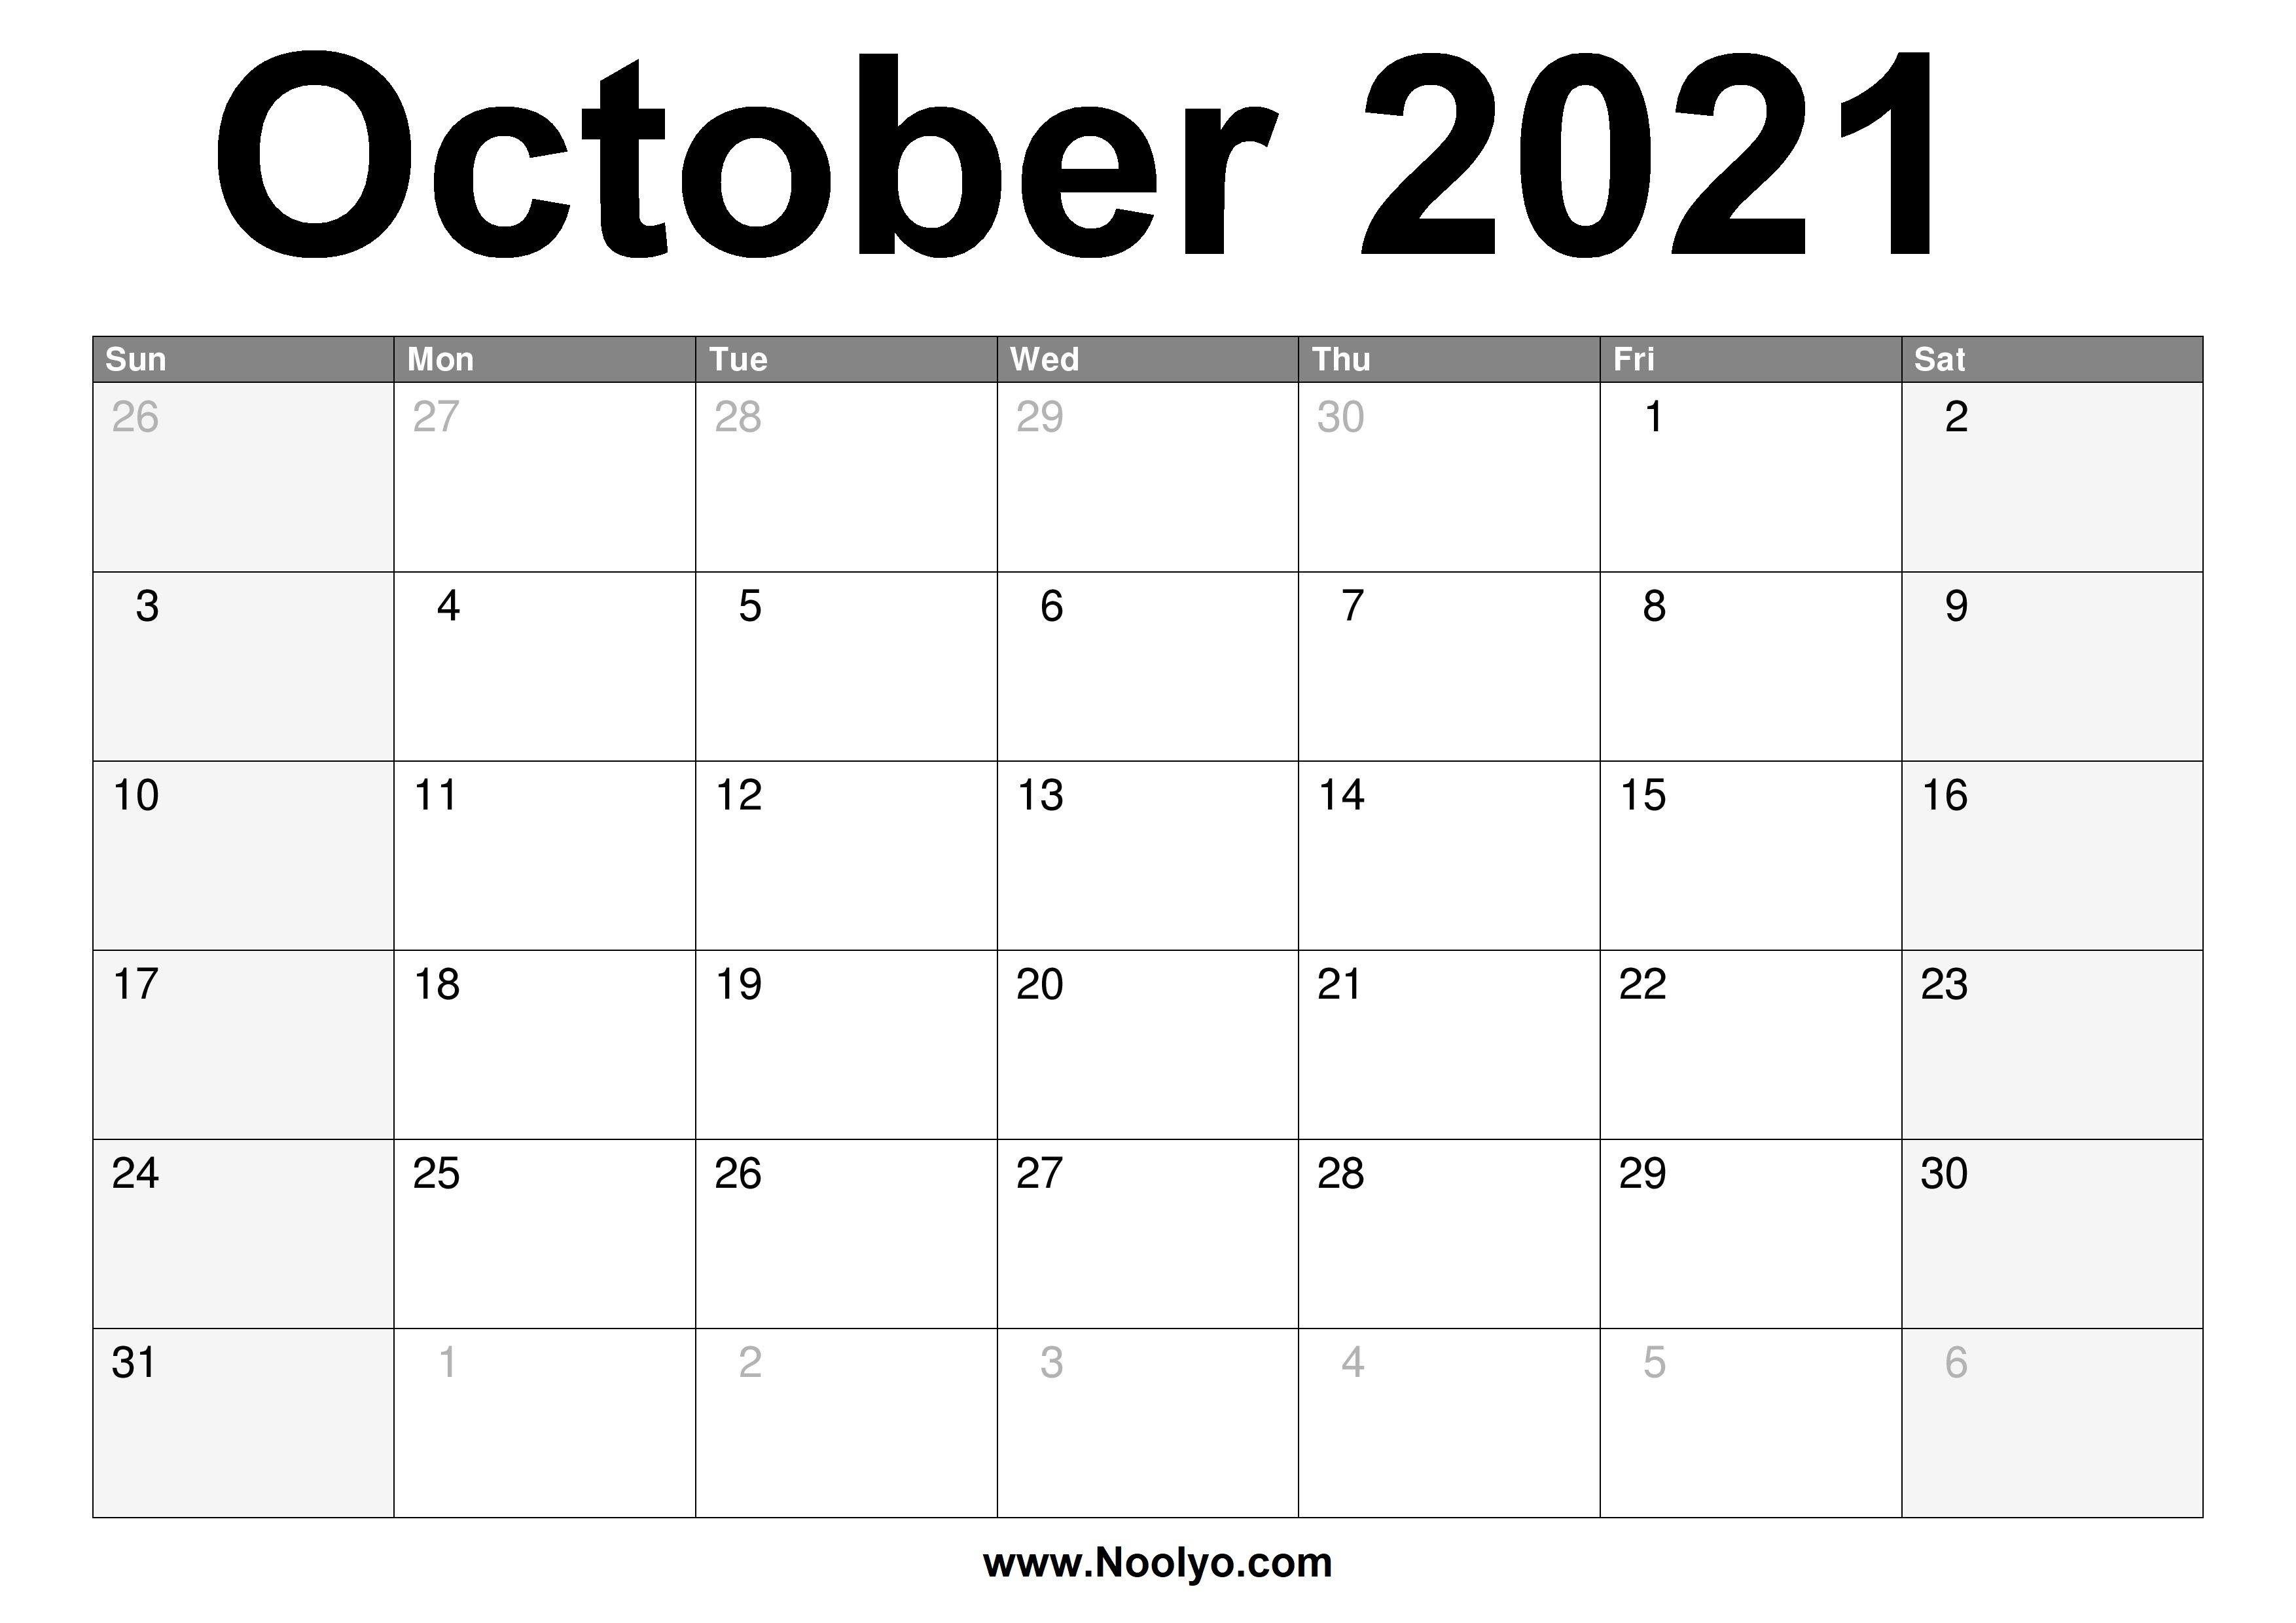 October 2021 Calendar Printable - Free Download - Noolyo Print A Calendar October 2021